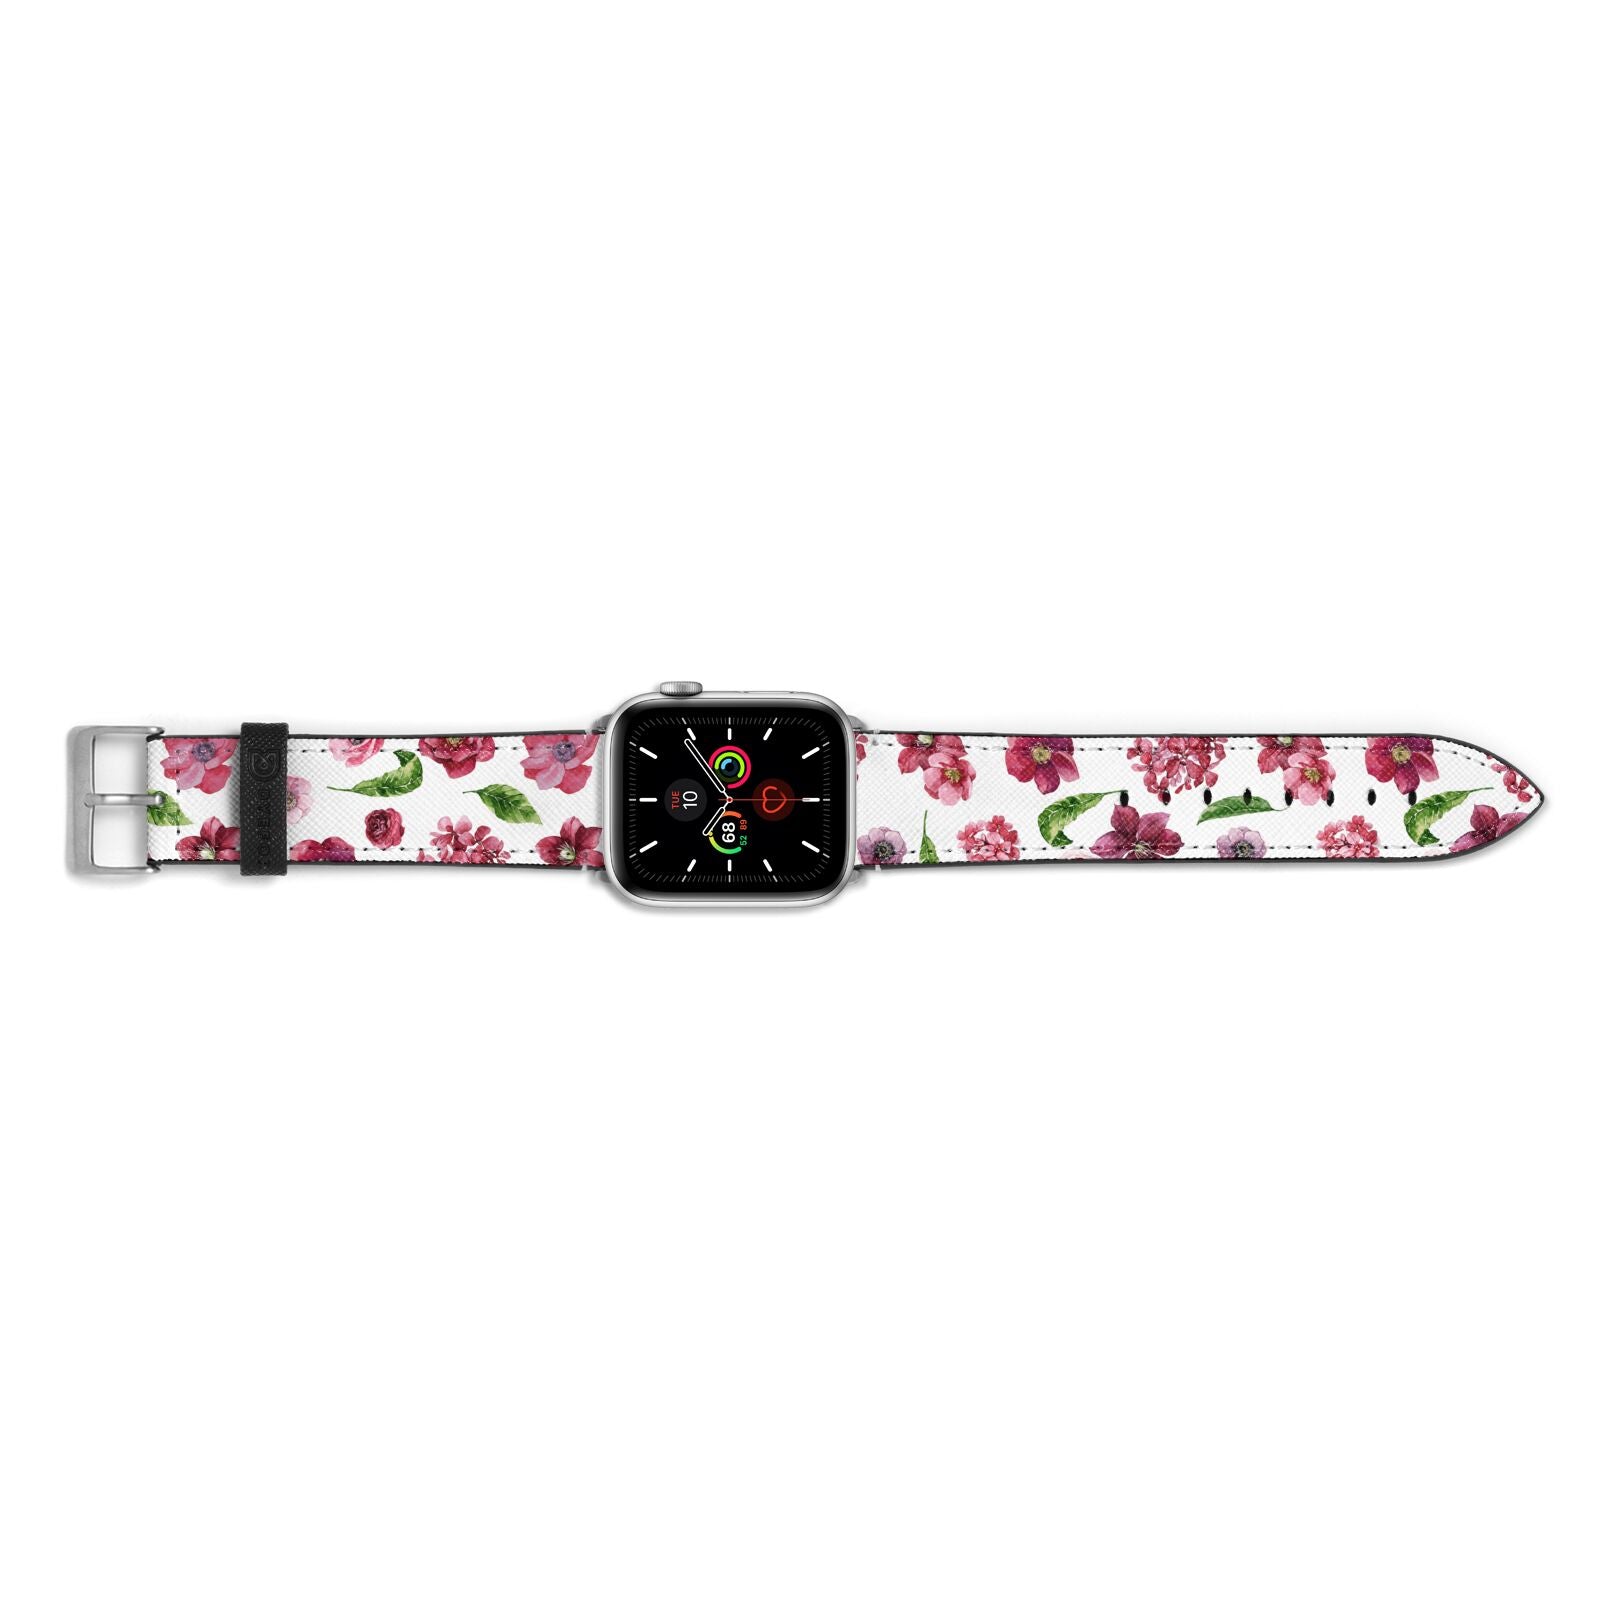 Pink Floral Apple Watch Strap Landscape Image Silver Hardware